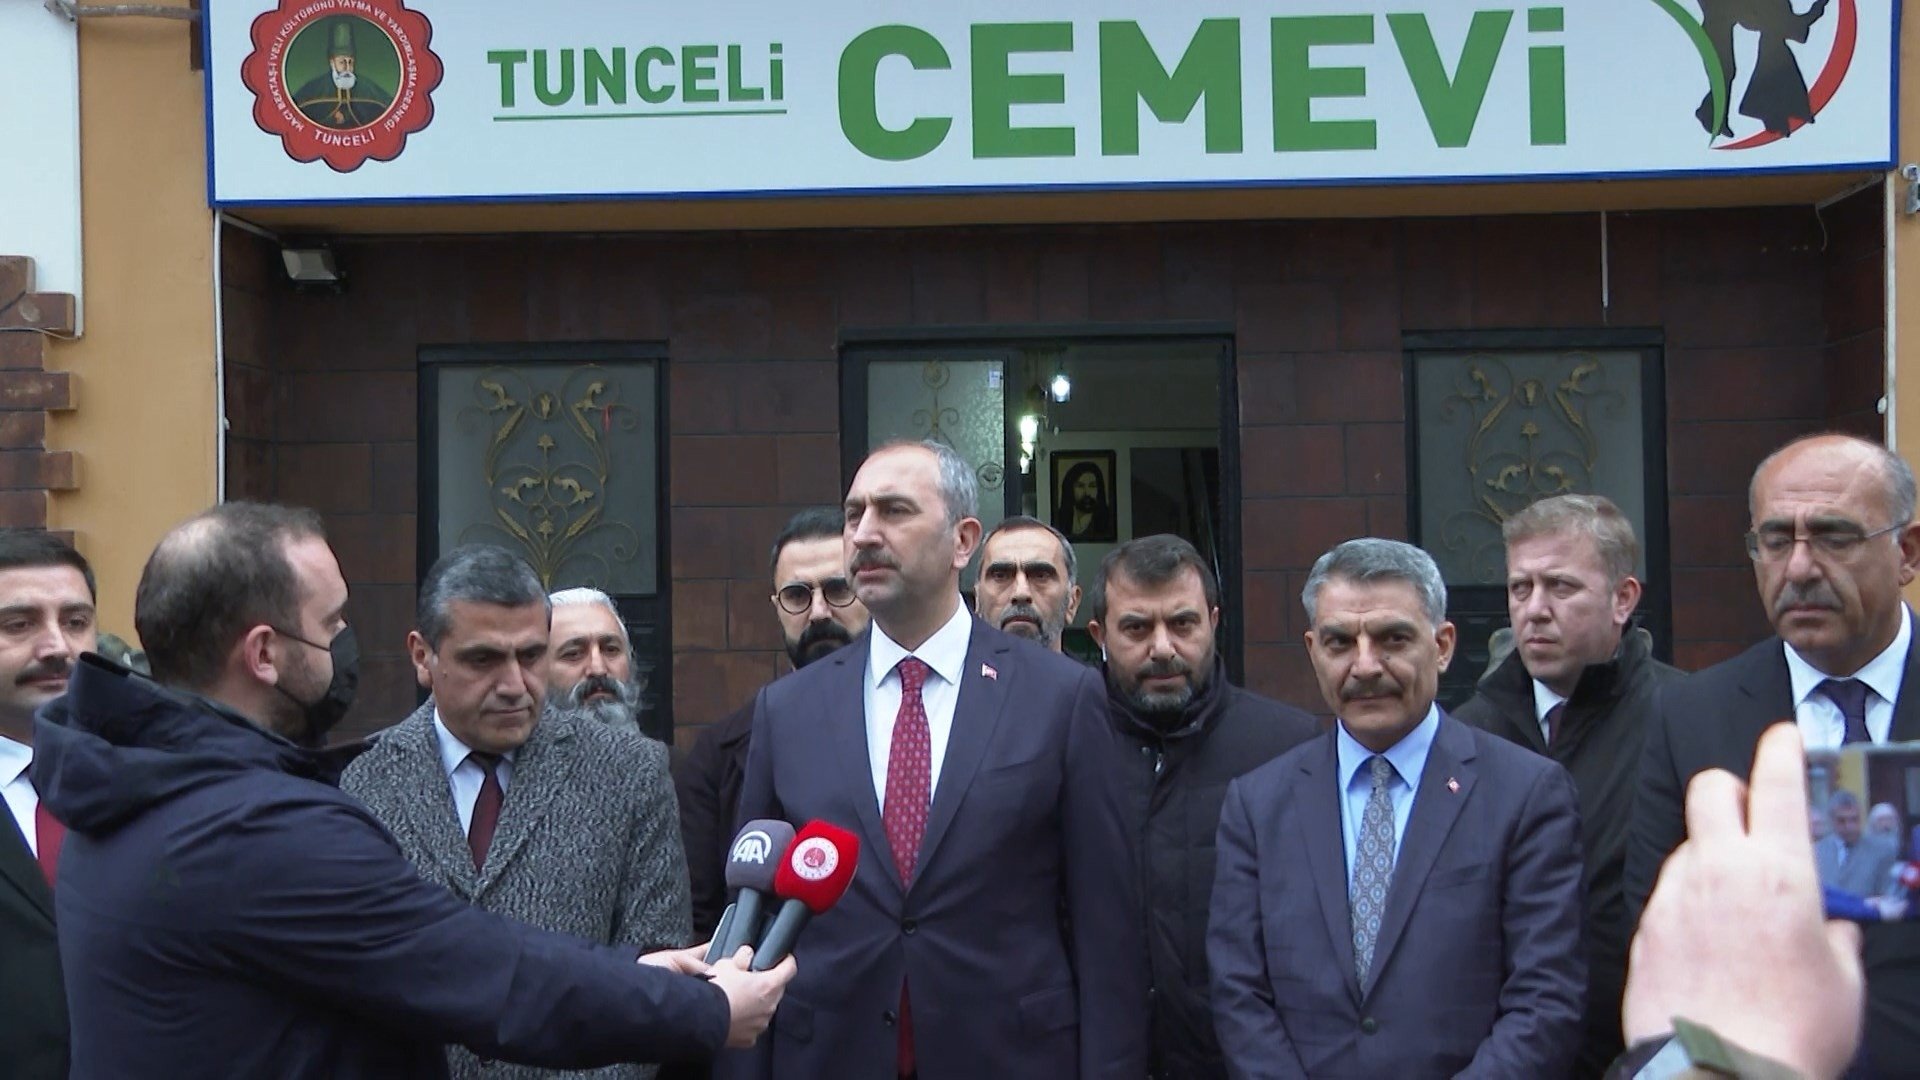 Justice Minister Abdulhamit Gül (C) speaks to reporters during a visit to the Tunceli Cemevi in Tunceli, Turkey, Dec. 18, 2021. (IHA Photo)